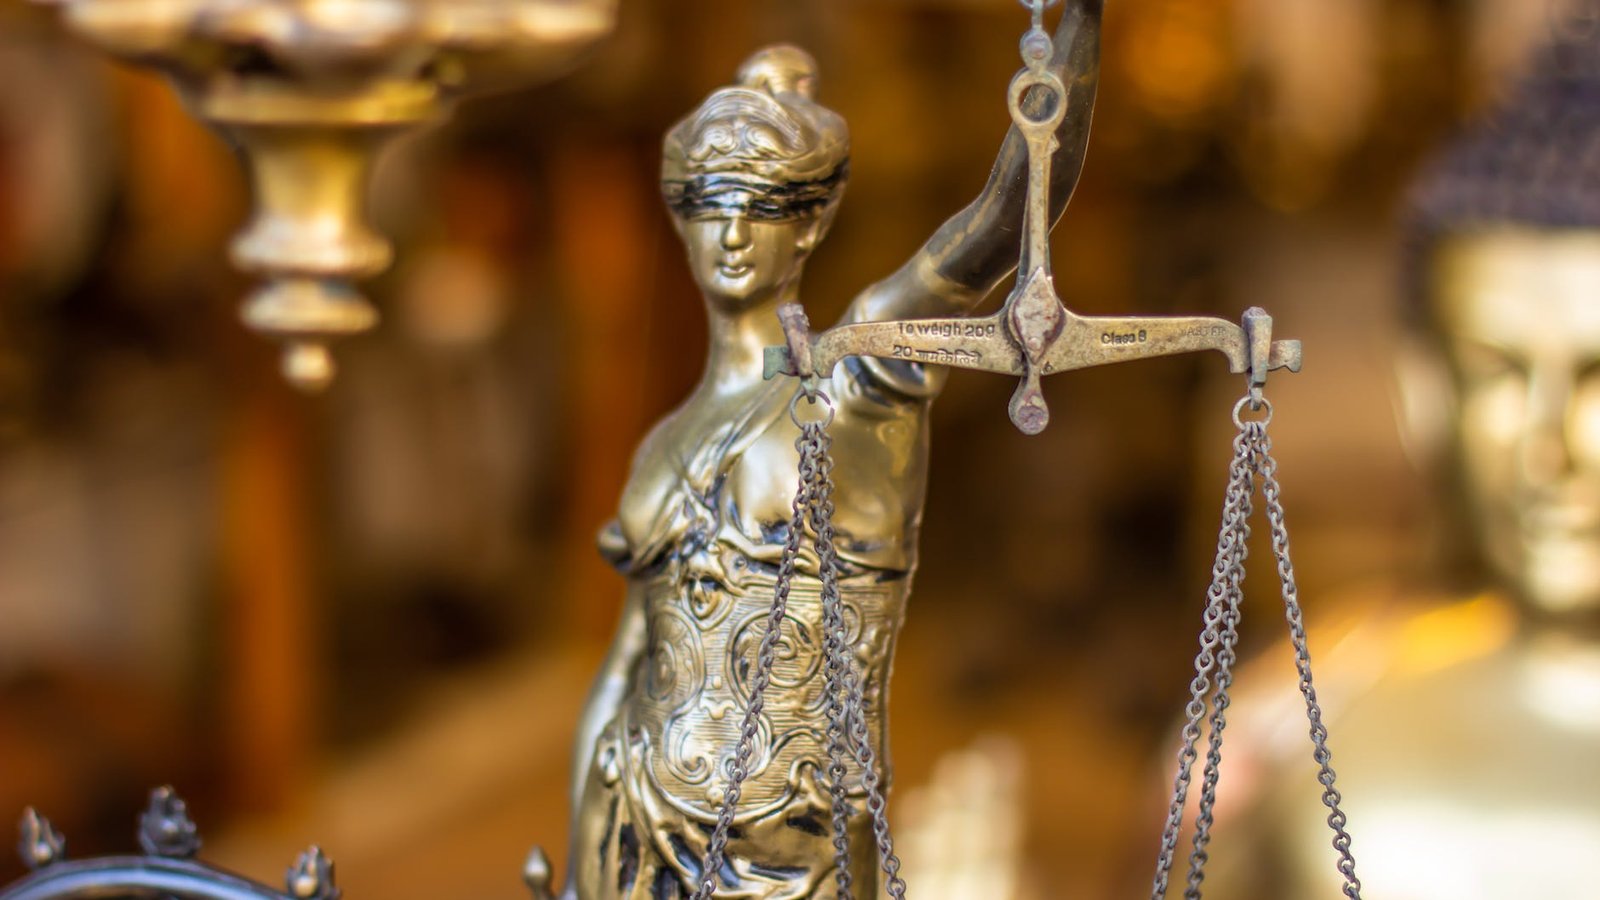 close up of justice symbolic figurine